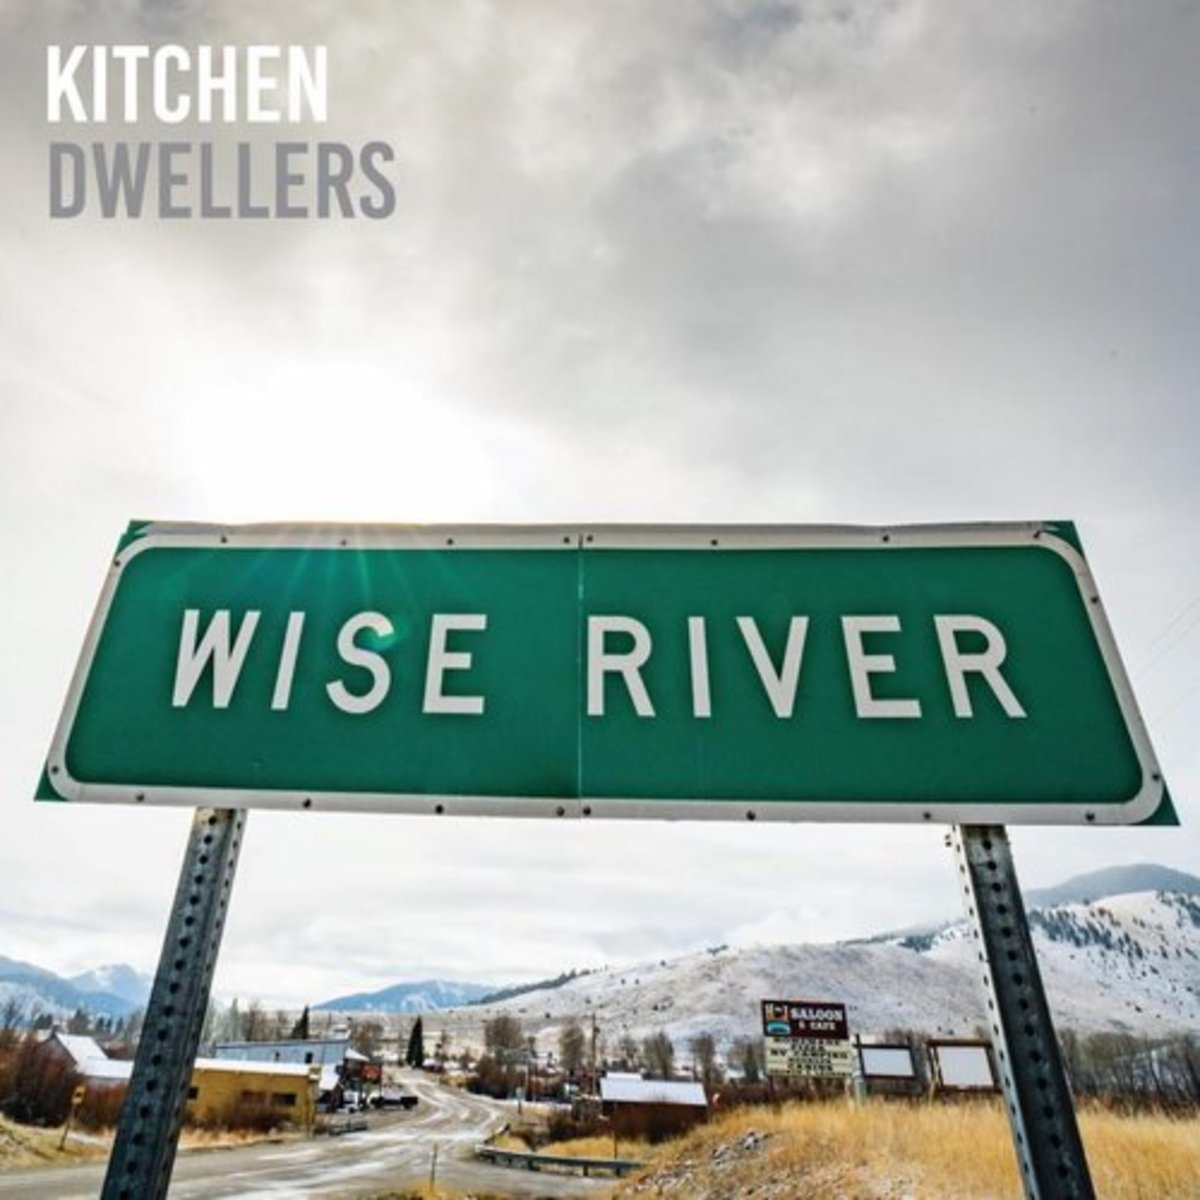 Kitchen Dwellers, "Wise River" 